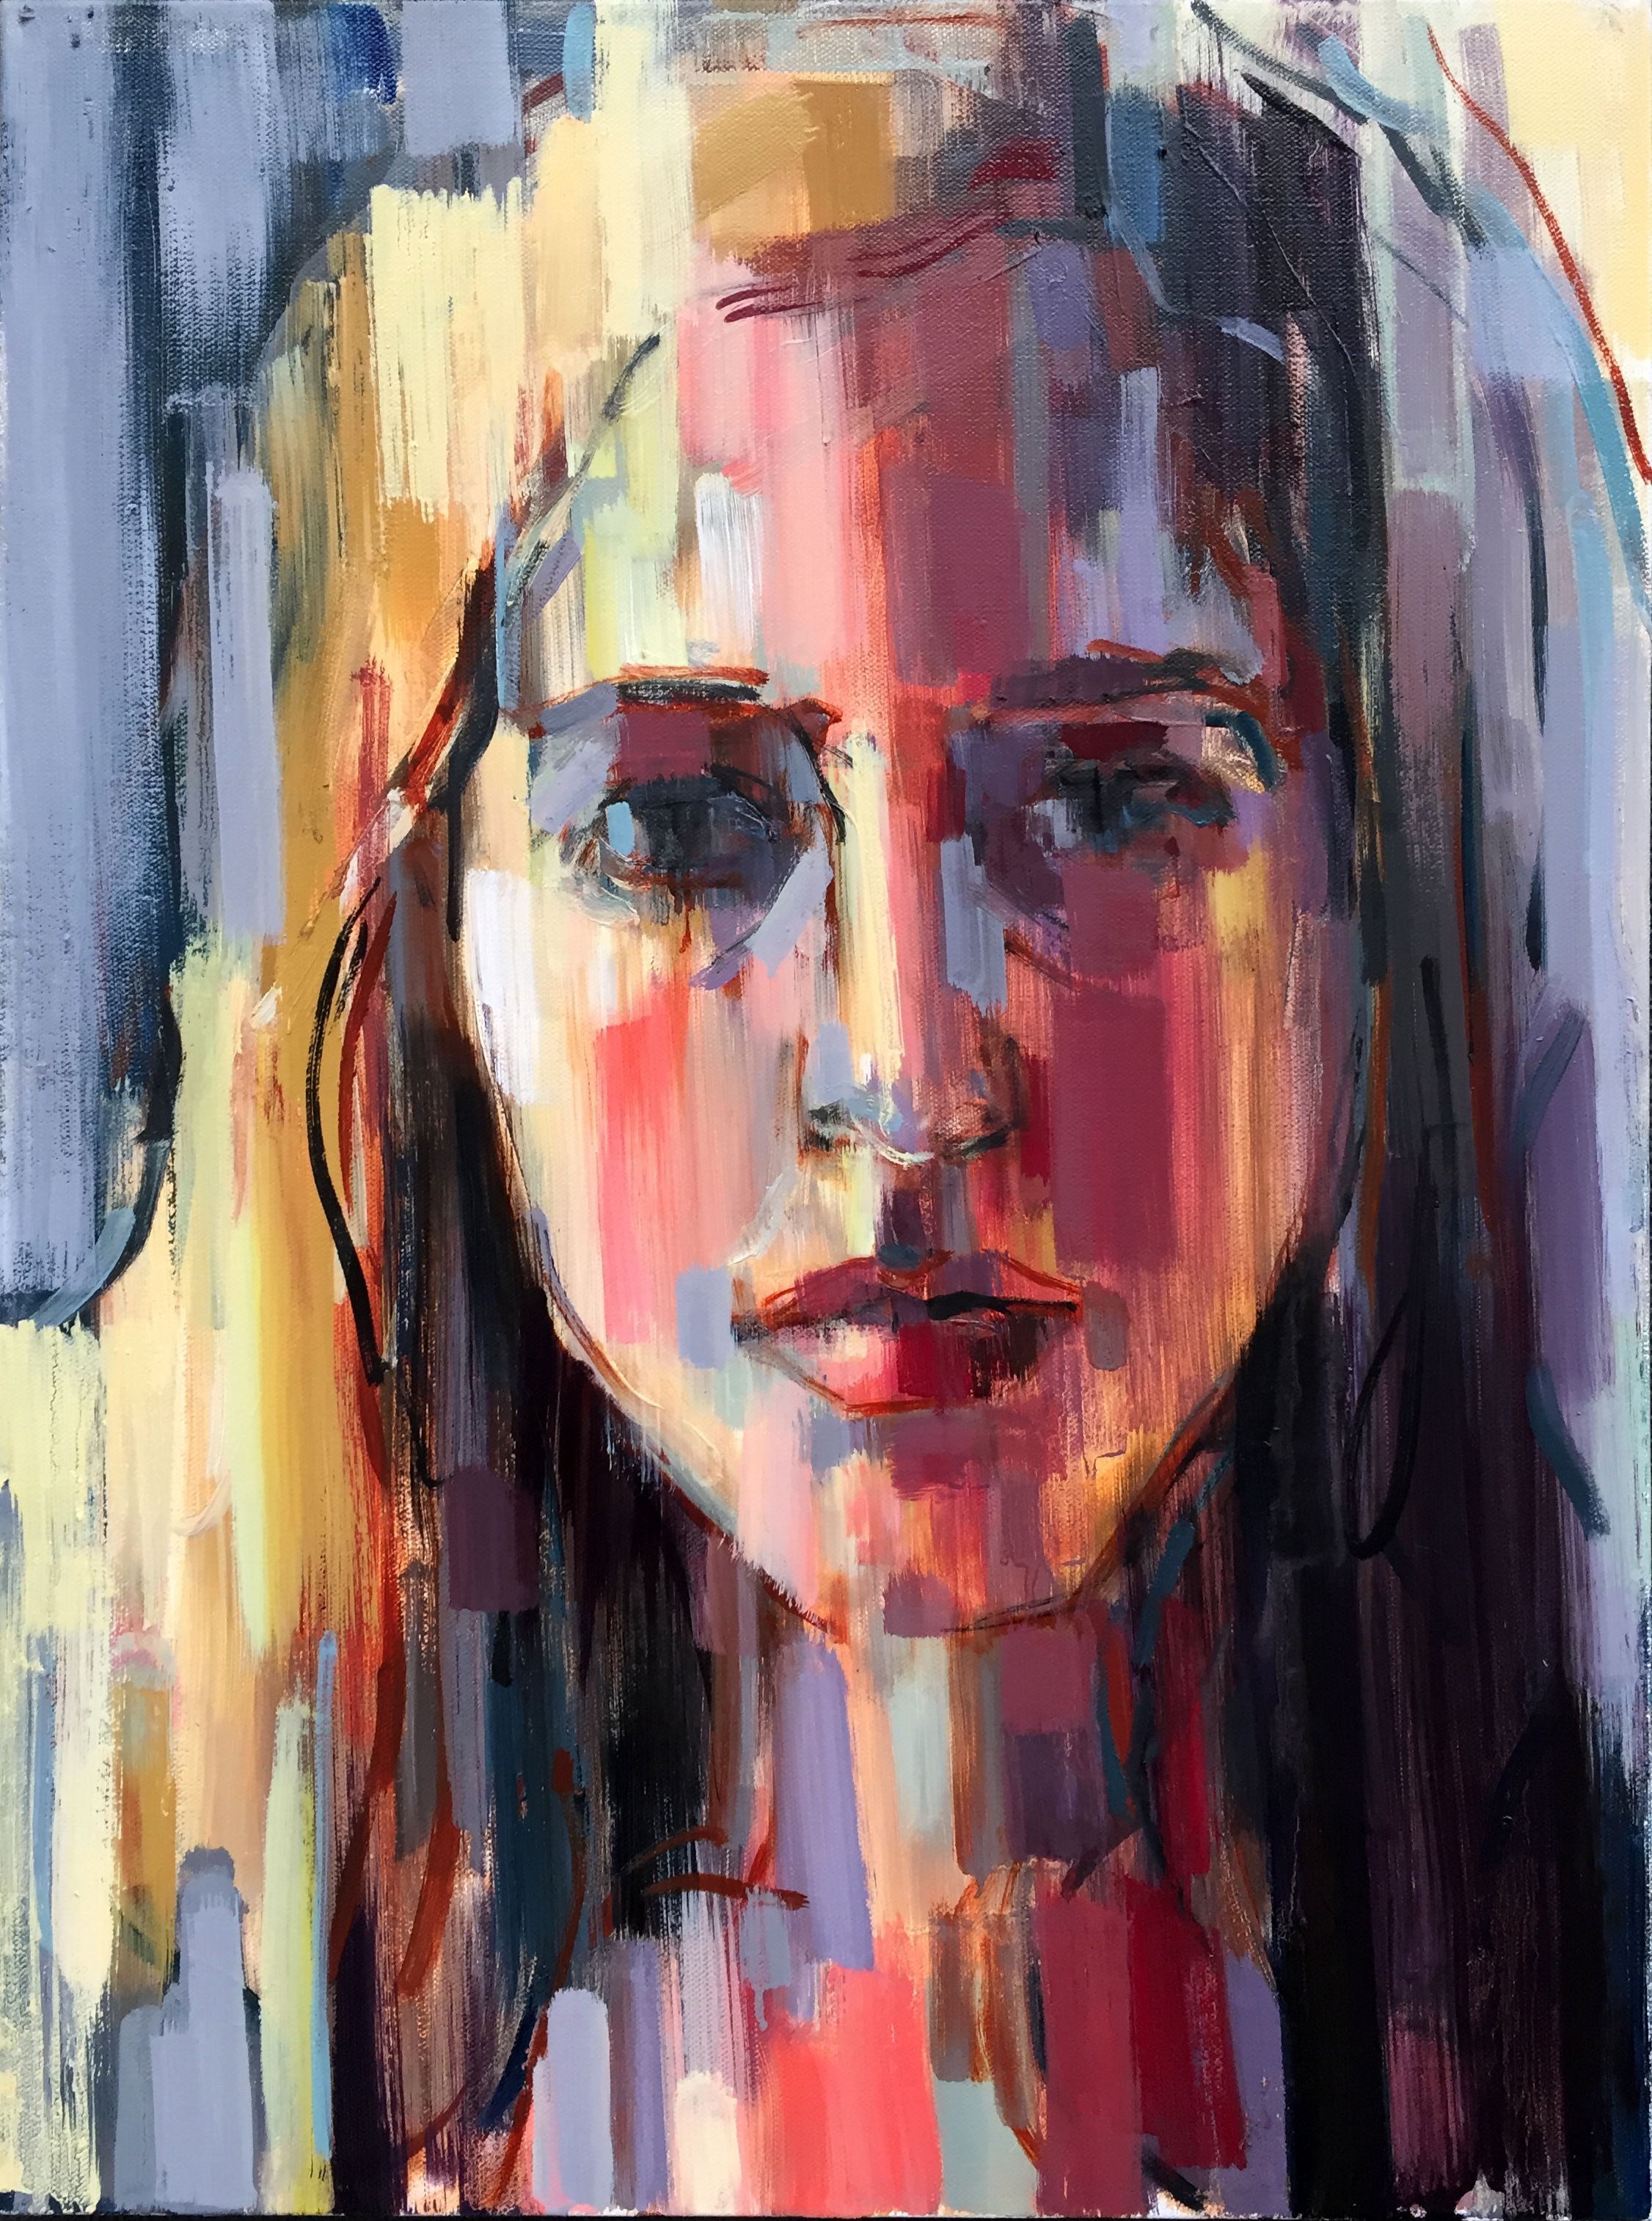   CGB in the Studio  2015 Oil on canvas 24" x 18" 